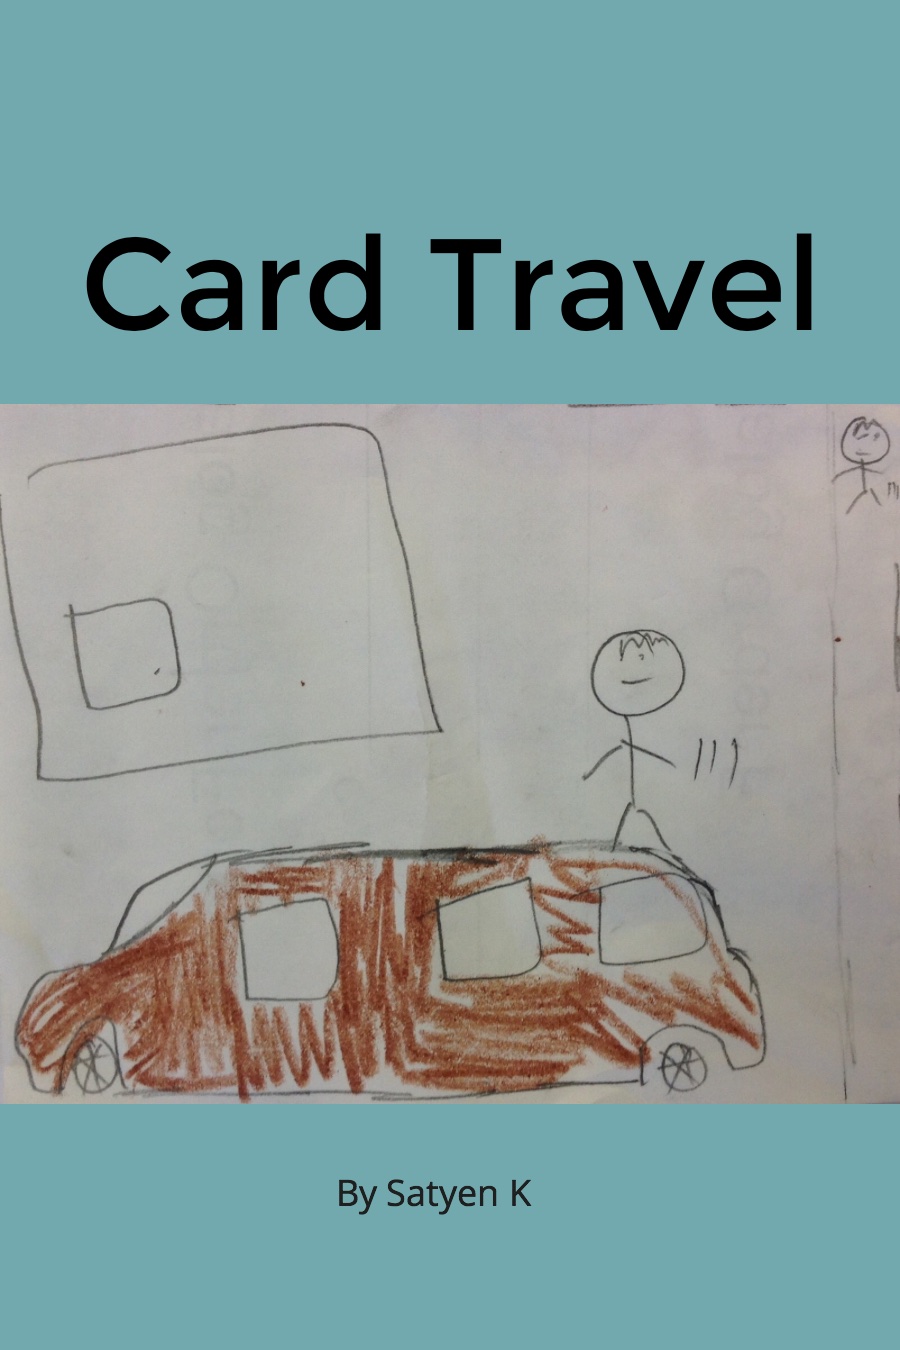 Card Travel by Satyen K